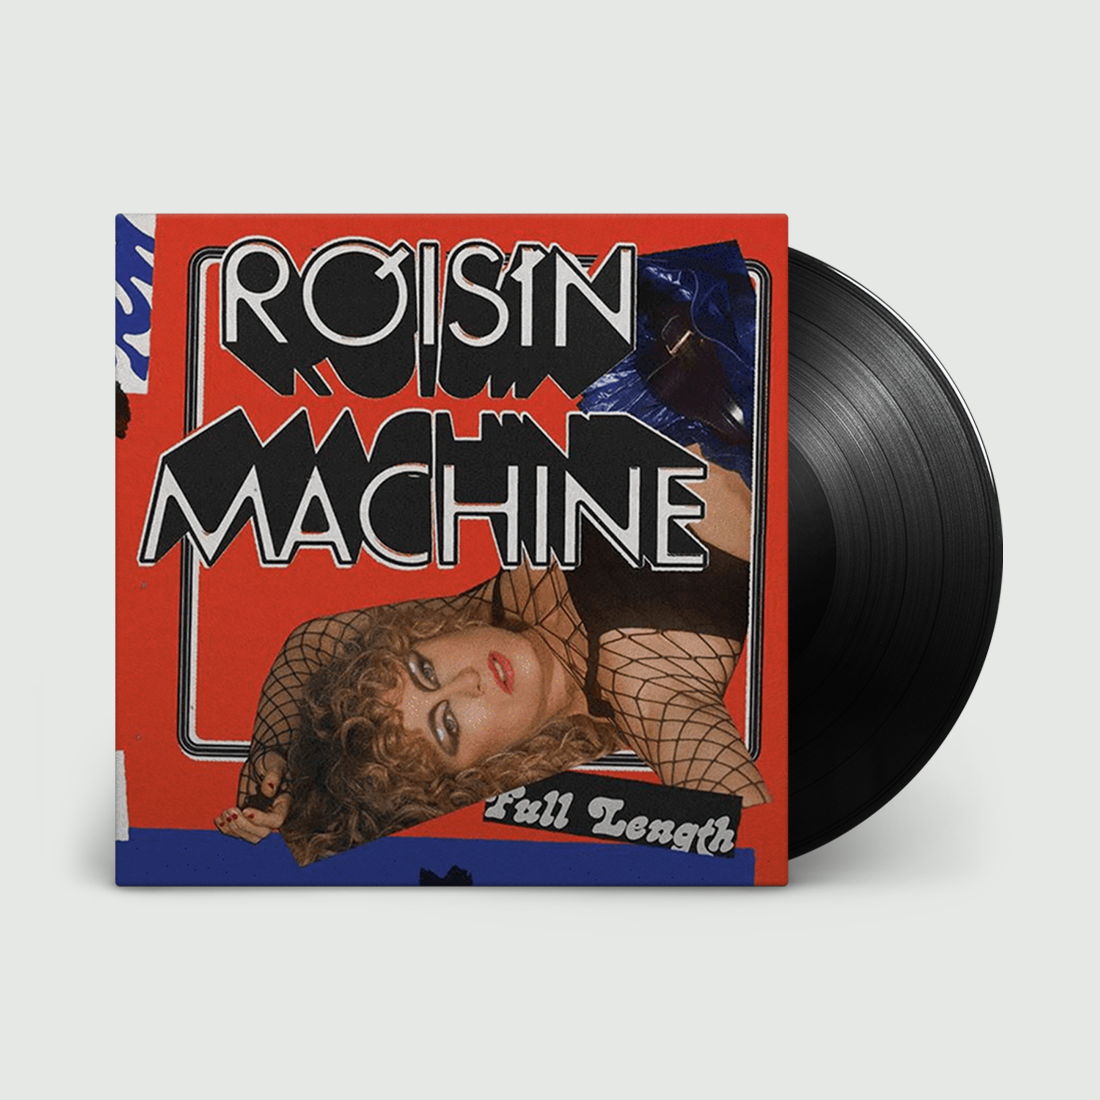 Róisín Murphy - Róisín Machine (2LP Gatefold Sleeve) (Roisin)